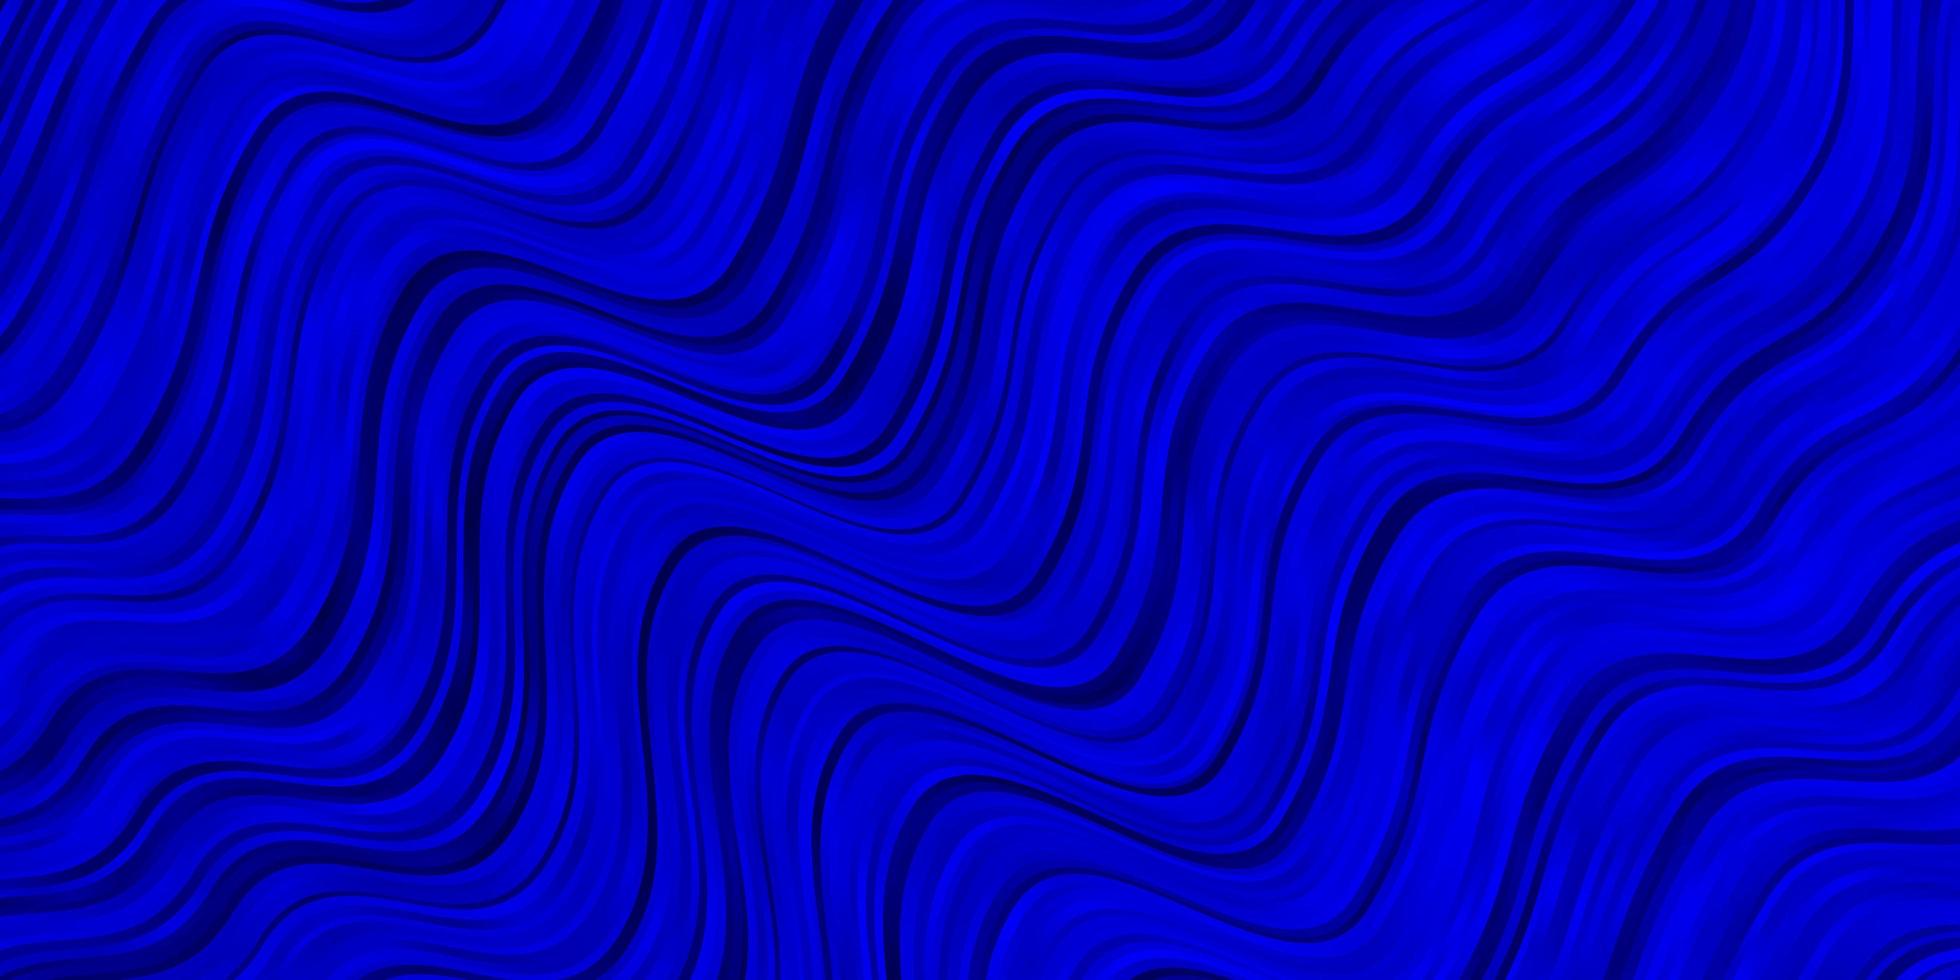 diseño de vector azul claro con curvas.